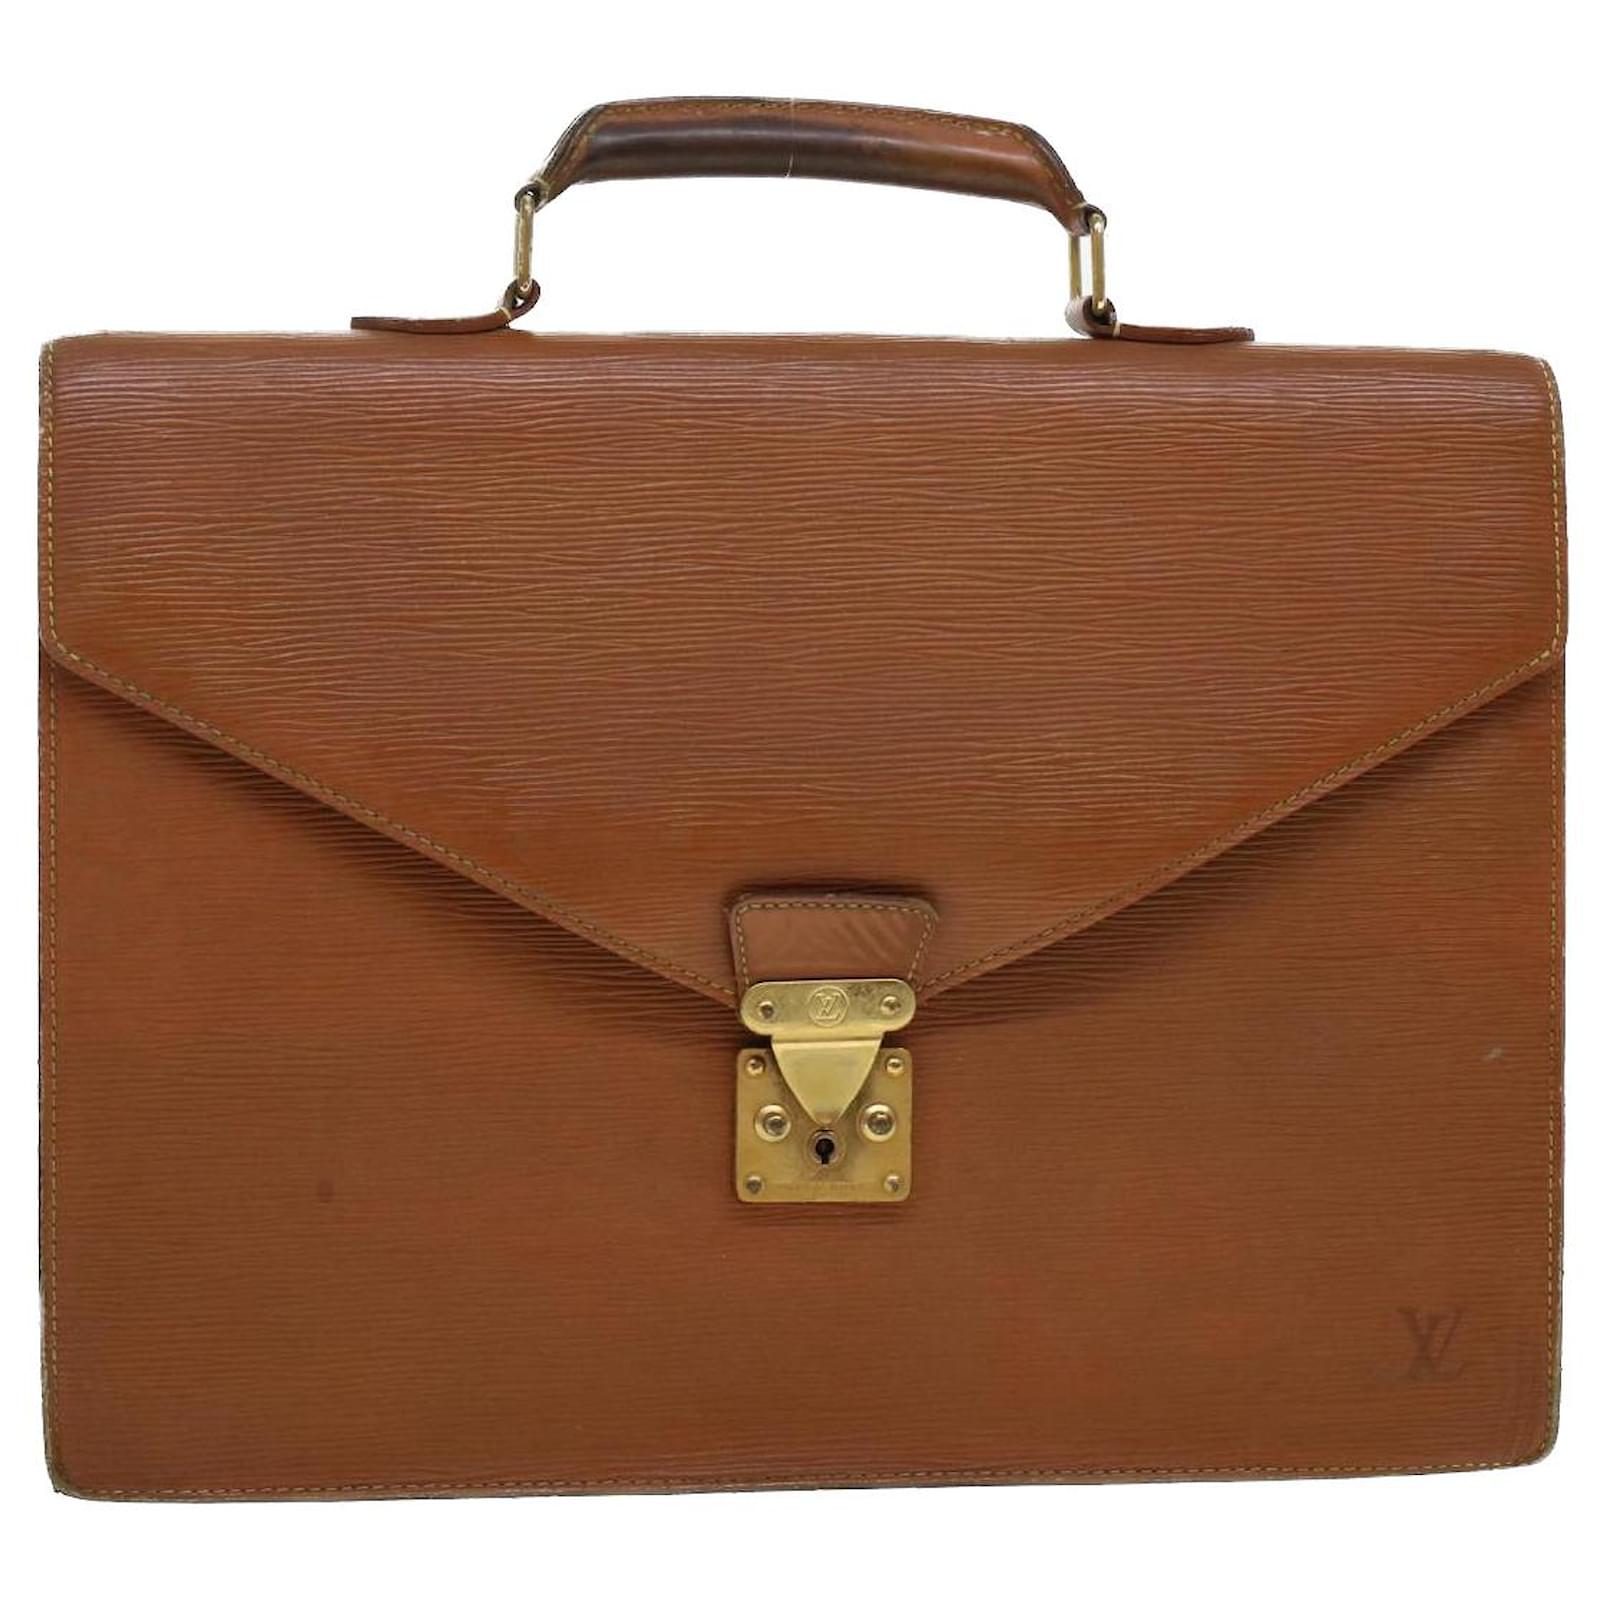 LOUIS VUITTON M53305 Monogram Serviette Fermoir Business bag Briefcase Brown